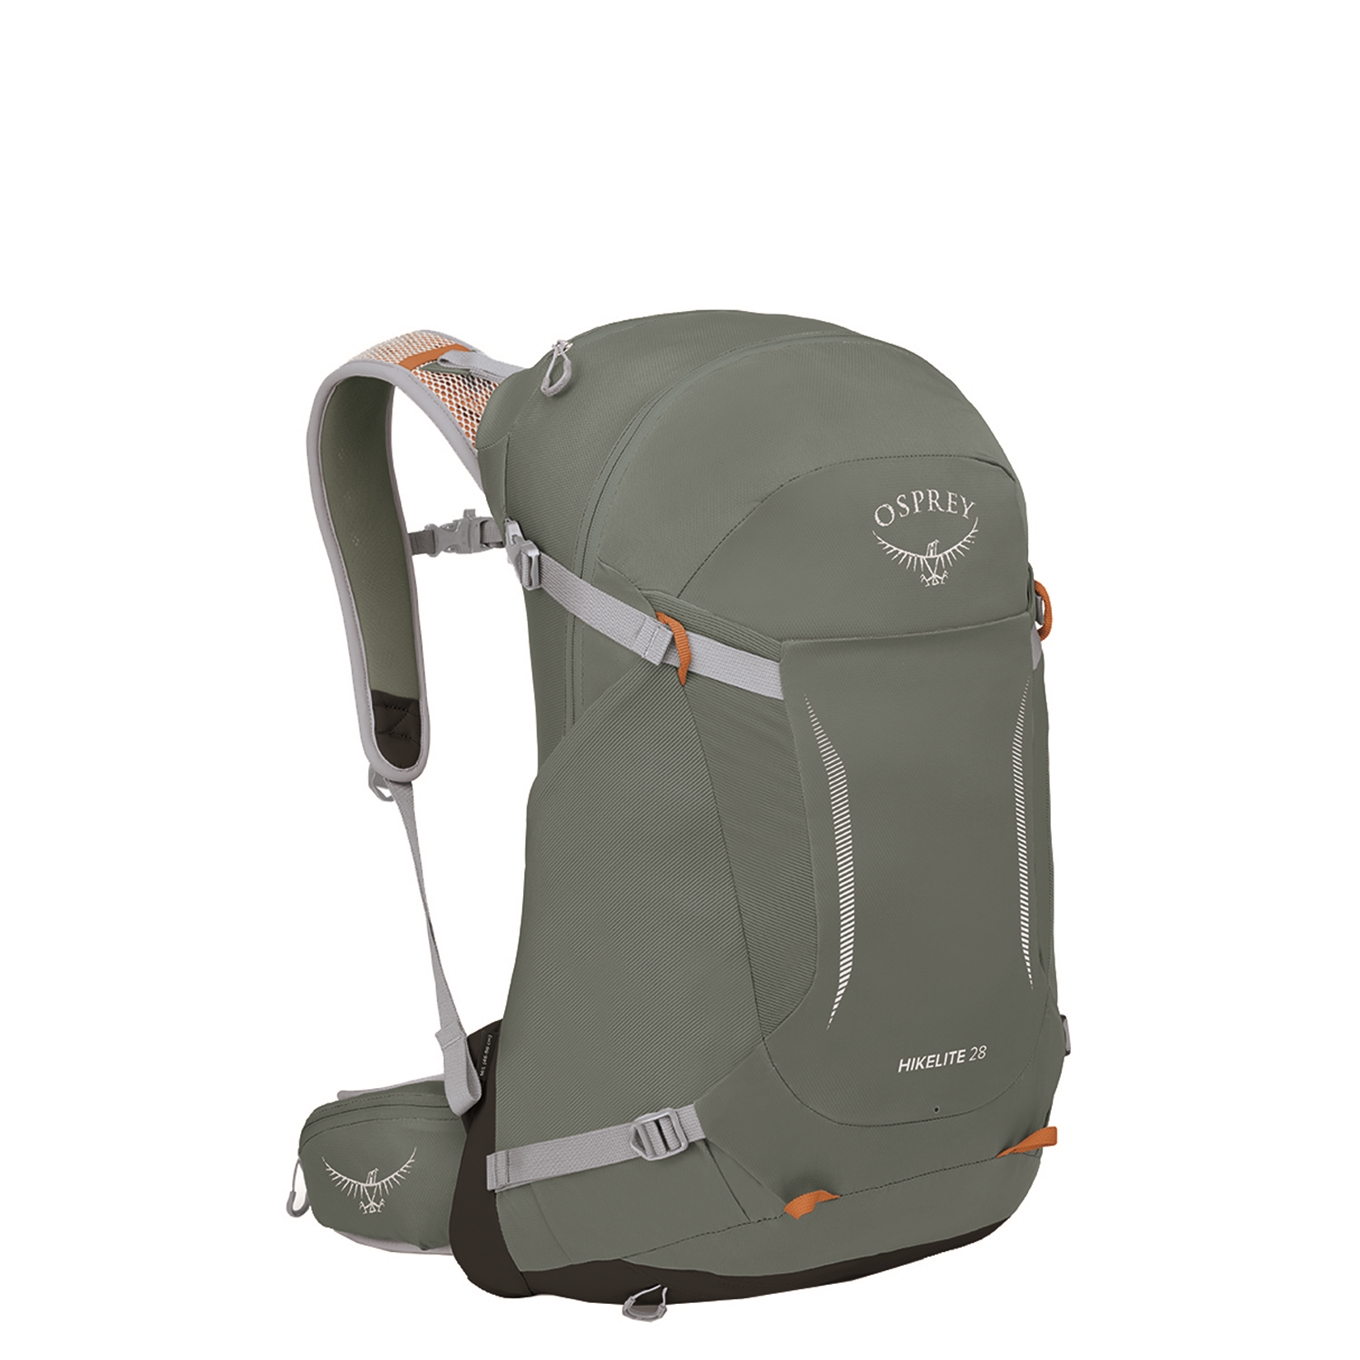 Osprey Hikelite 28 M/L pine leaf green backpack